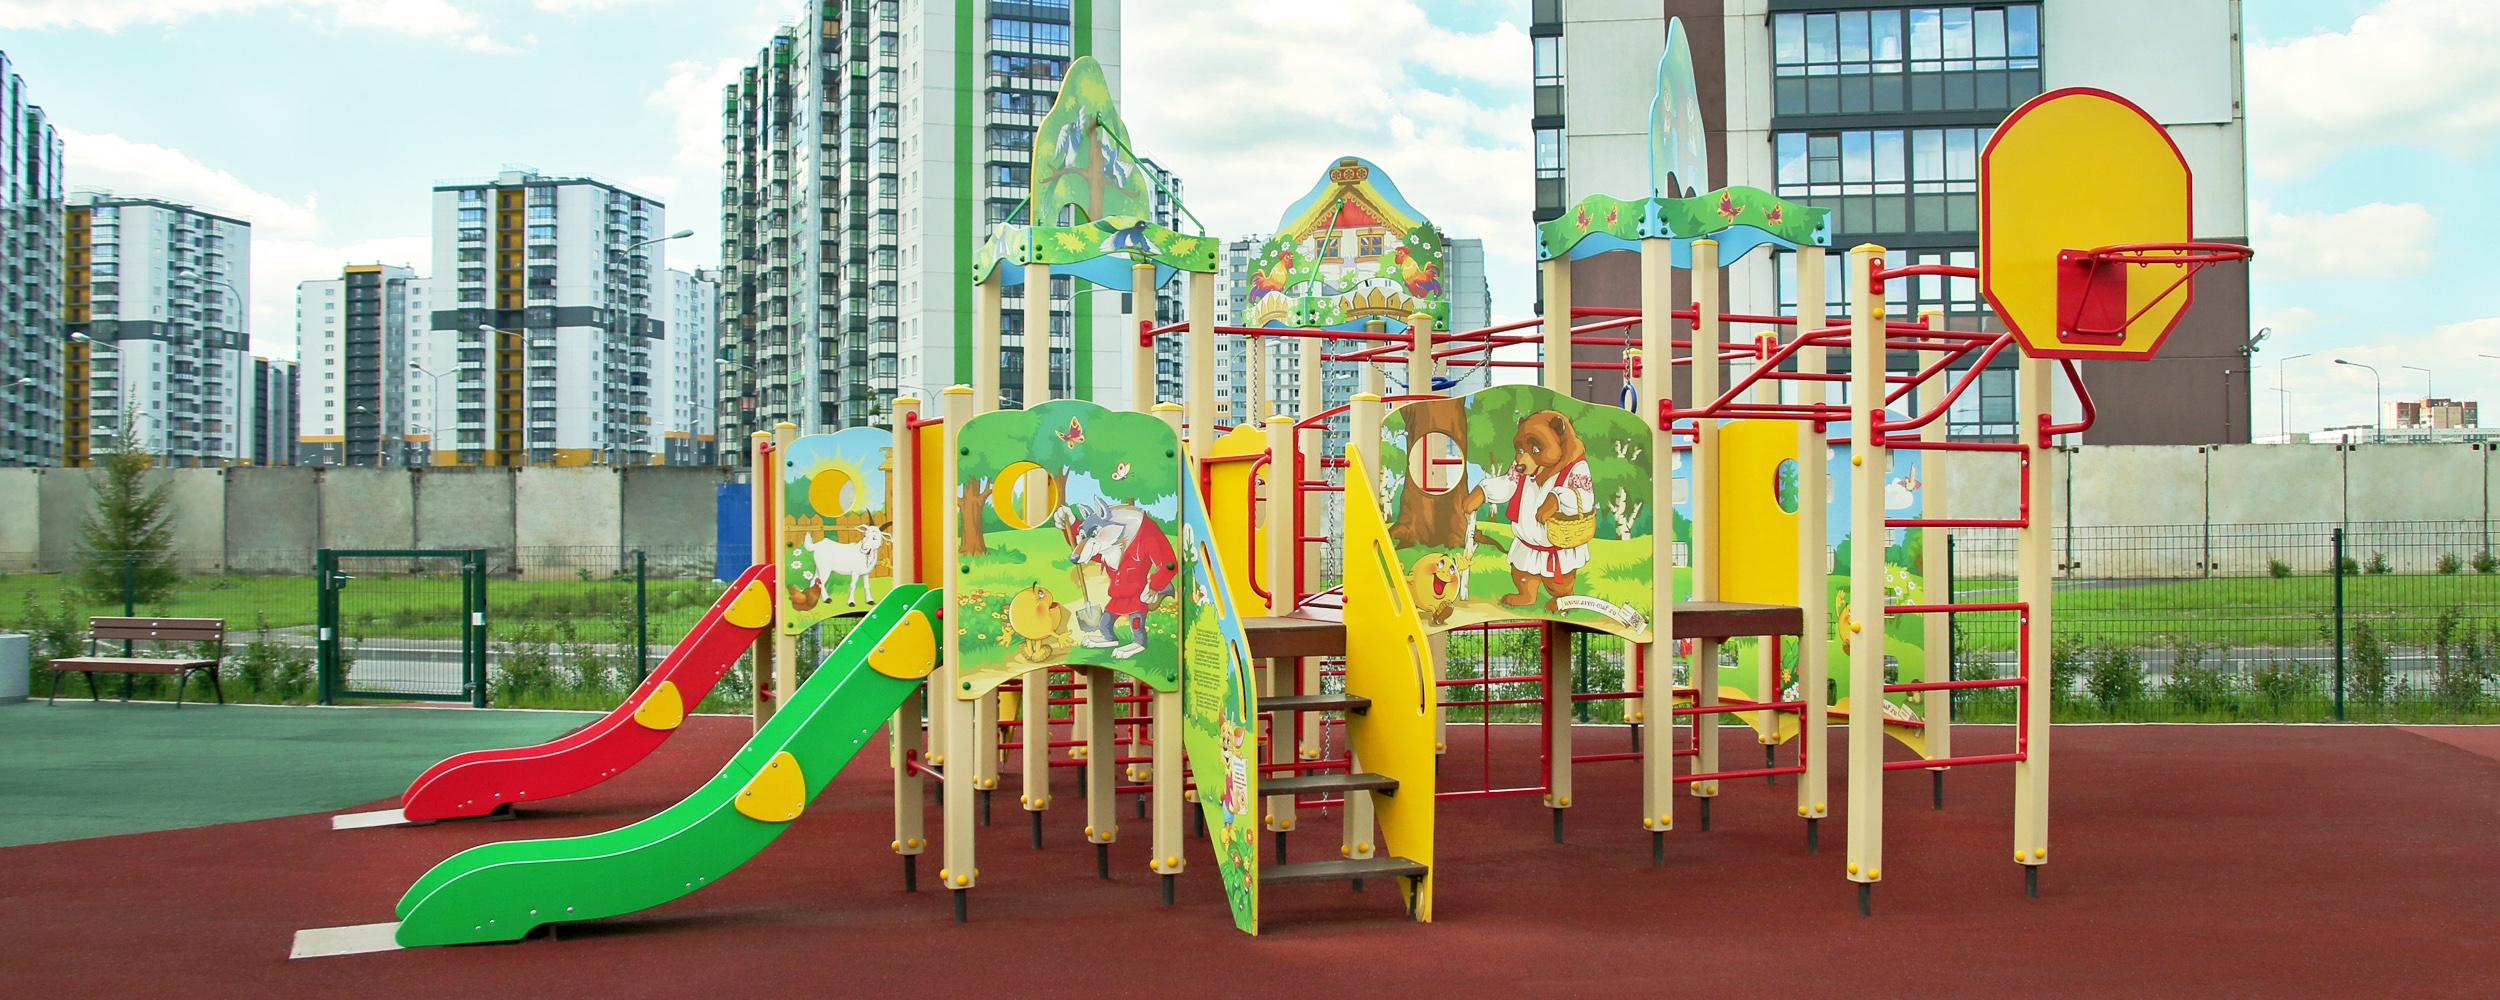 Детские площадки в стиле "Сказка"